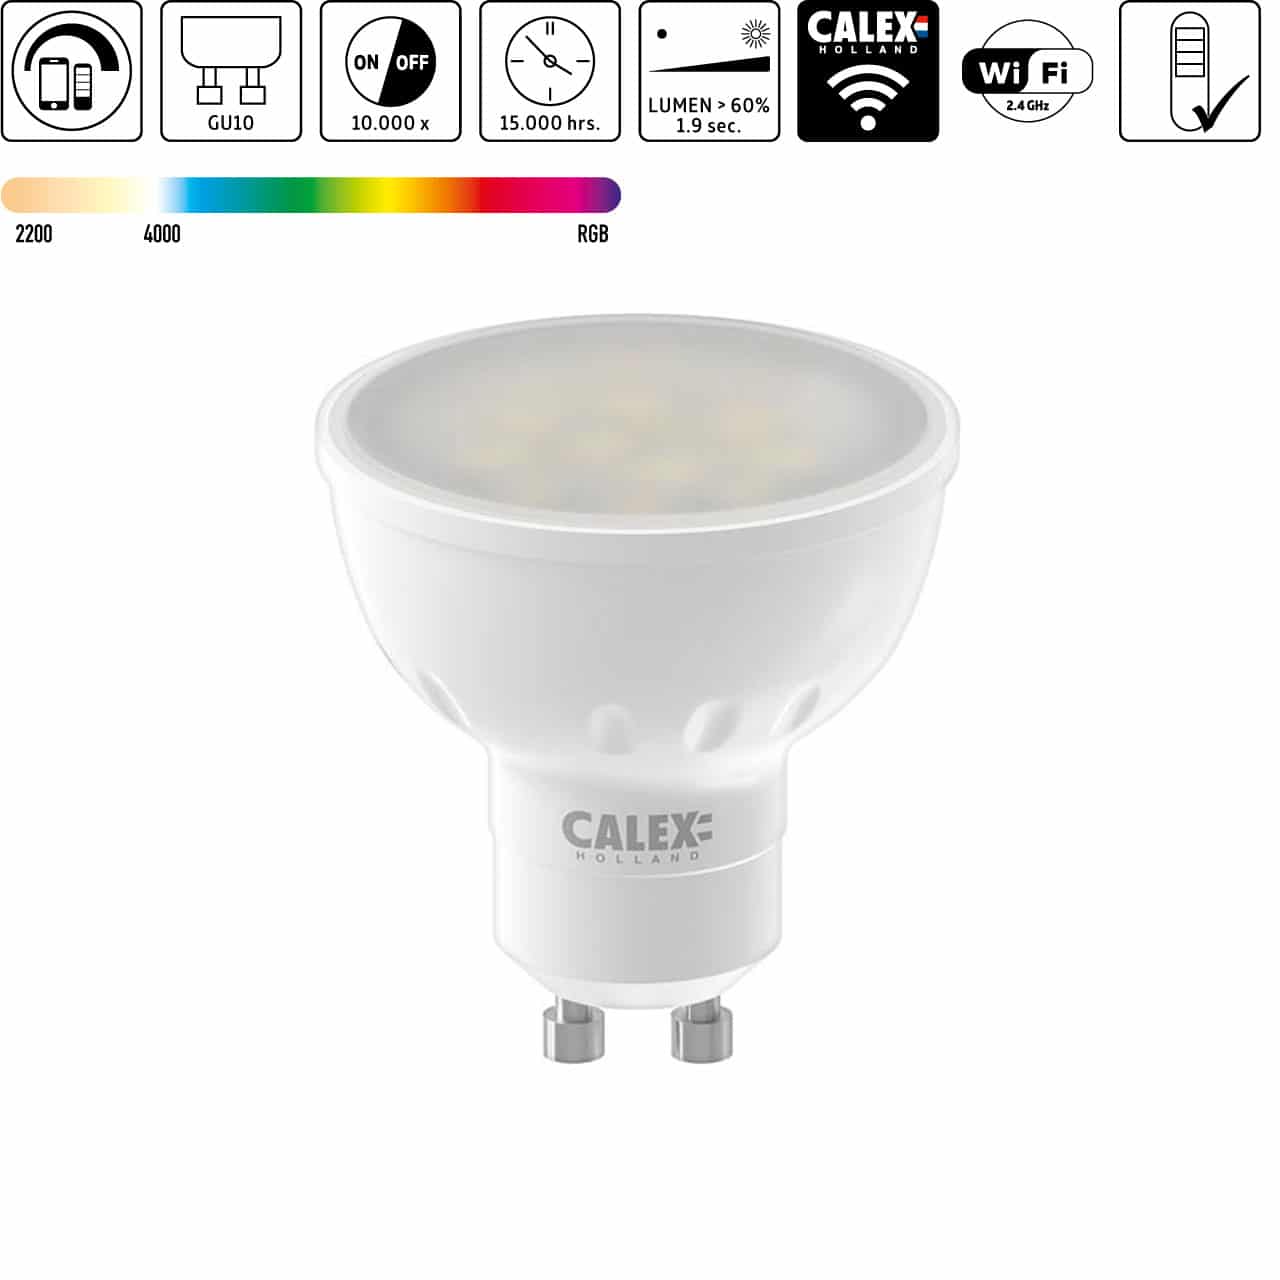 GU 10 Calex Smart Home dimbaar Reflector lamp LED spot RGB